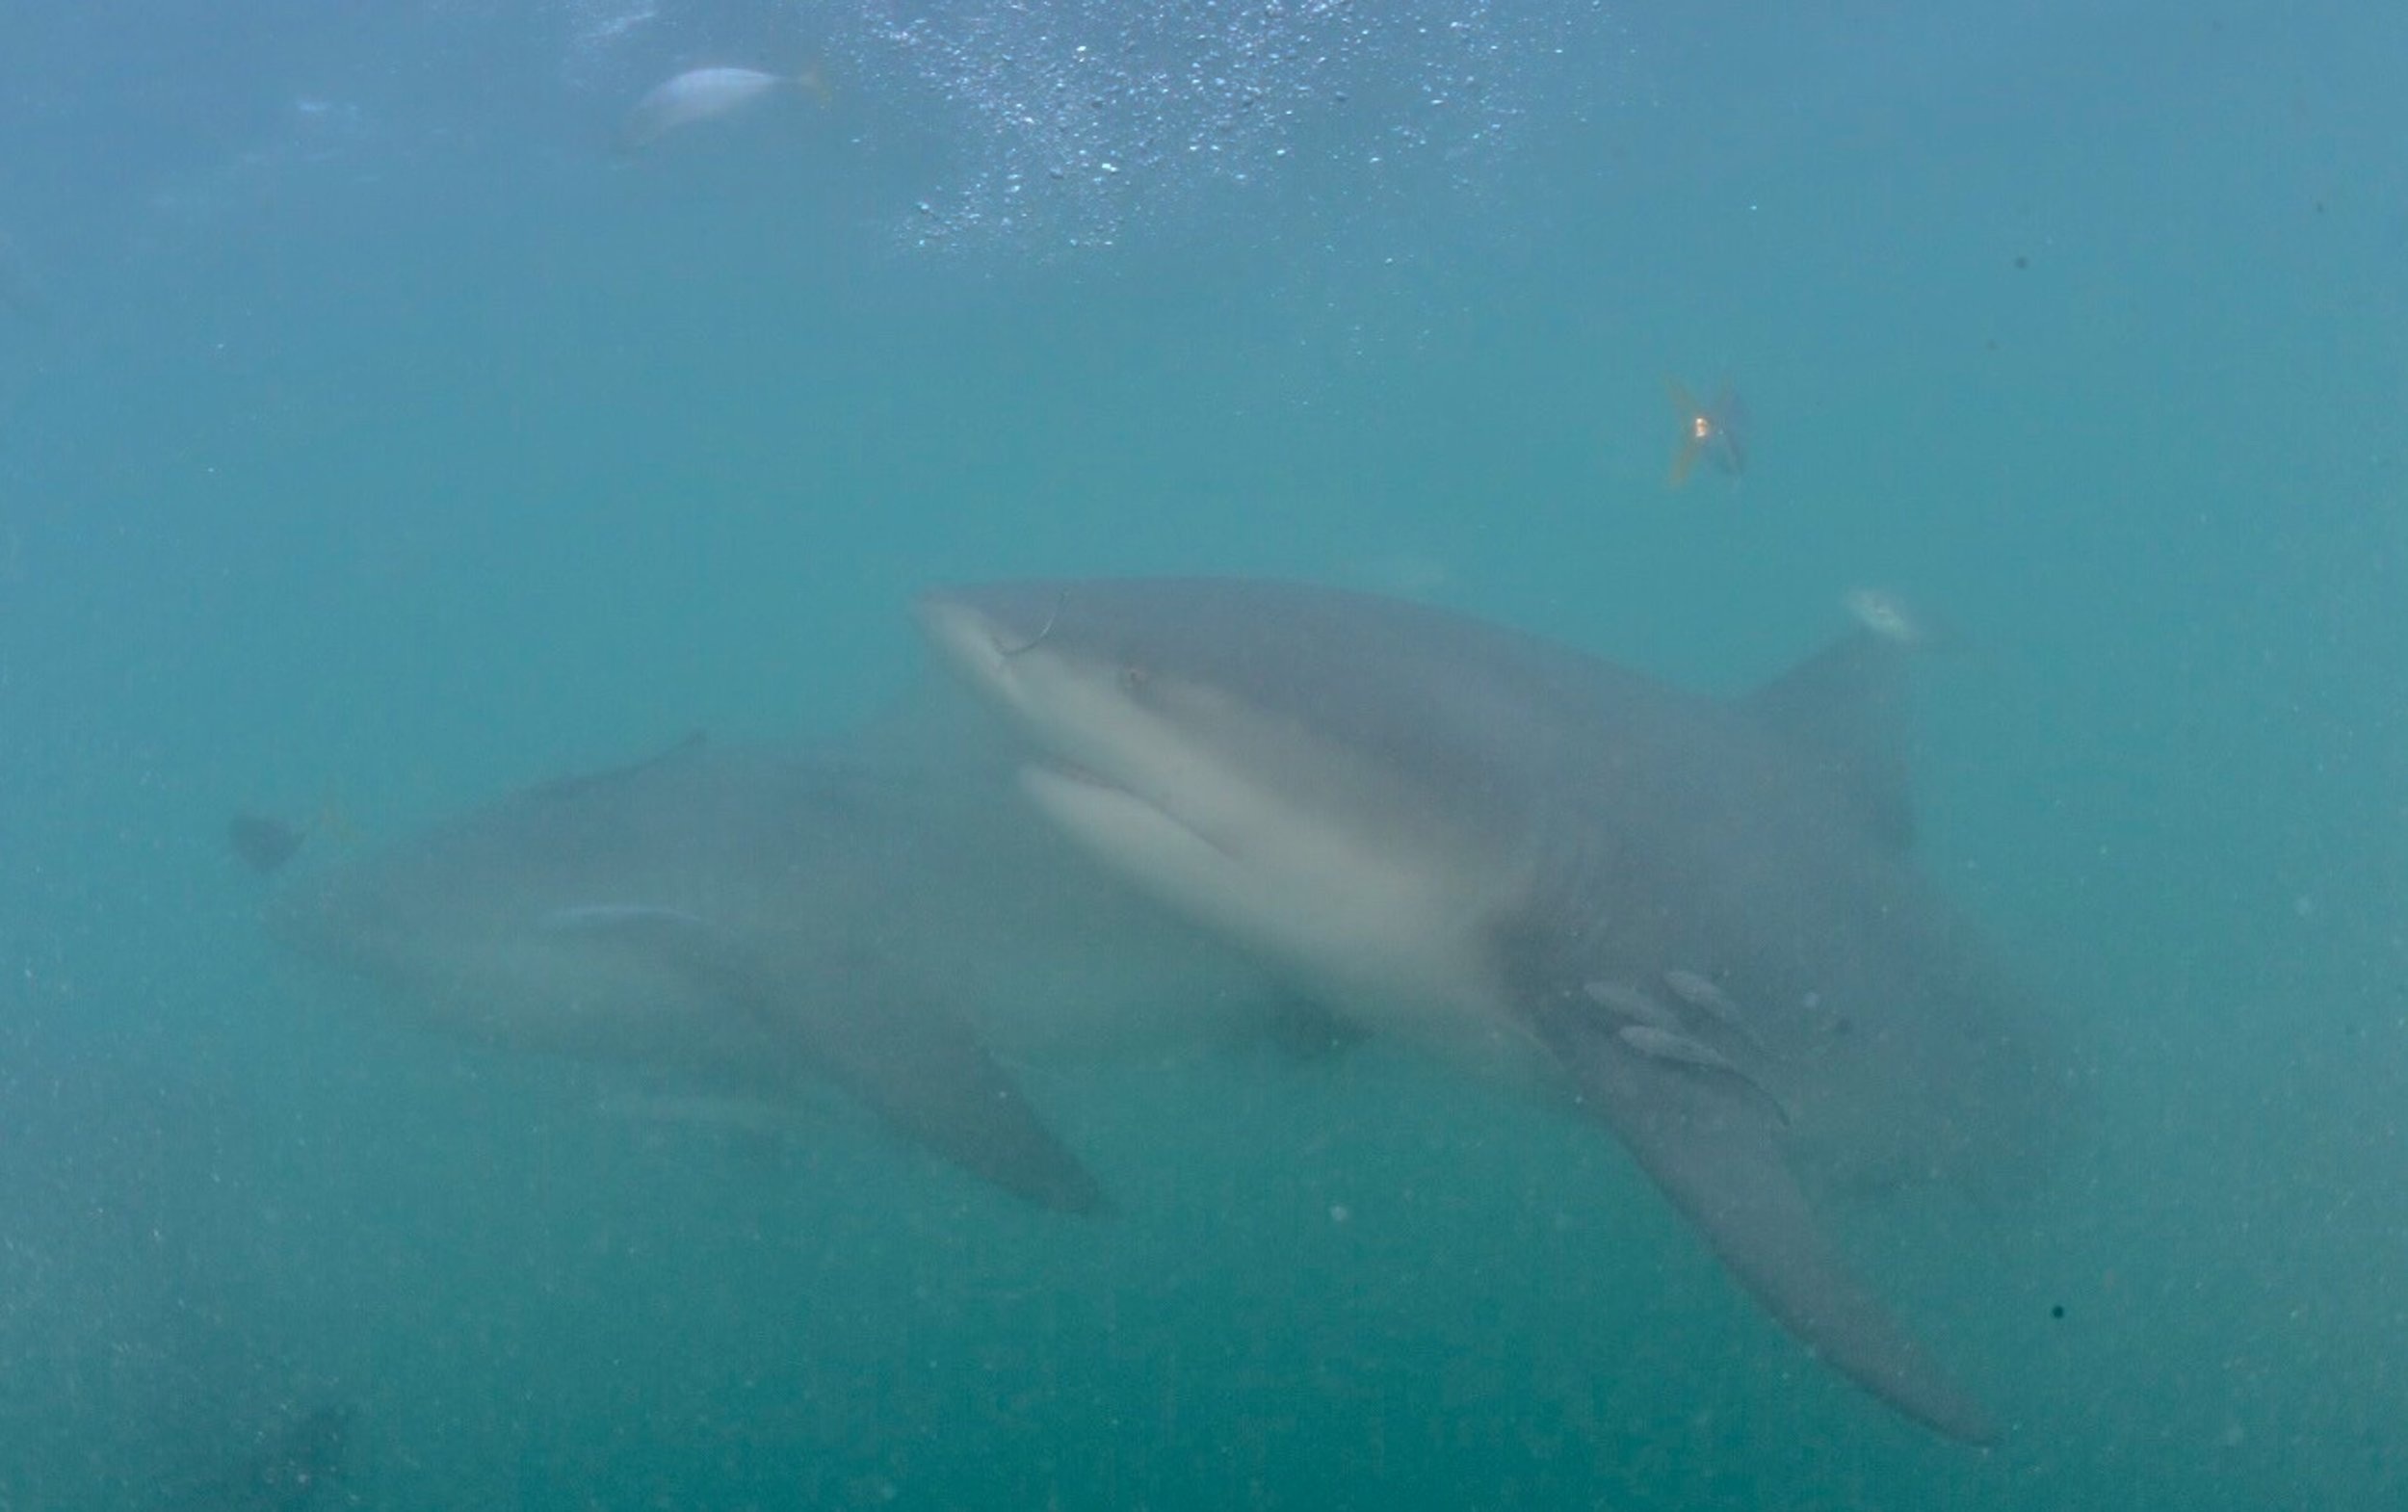 Two Bull sharks in murky water